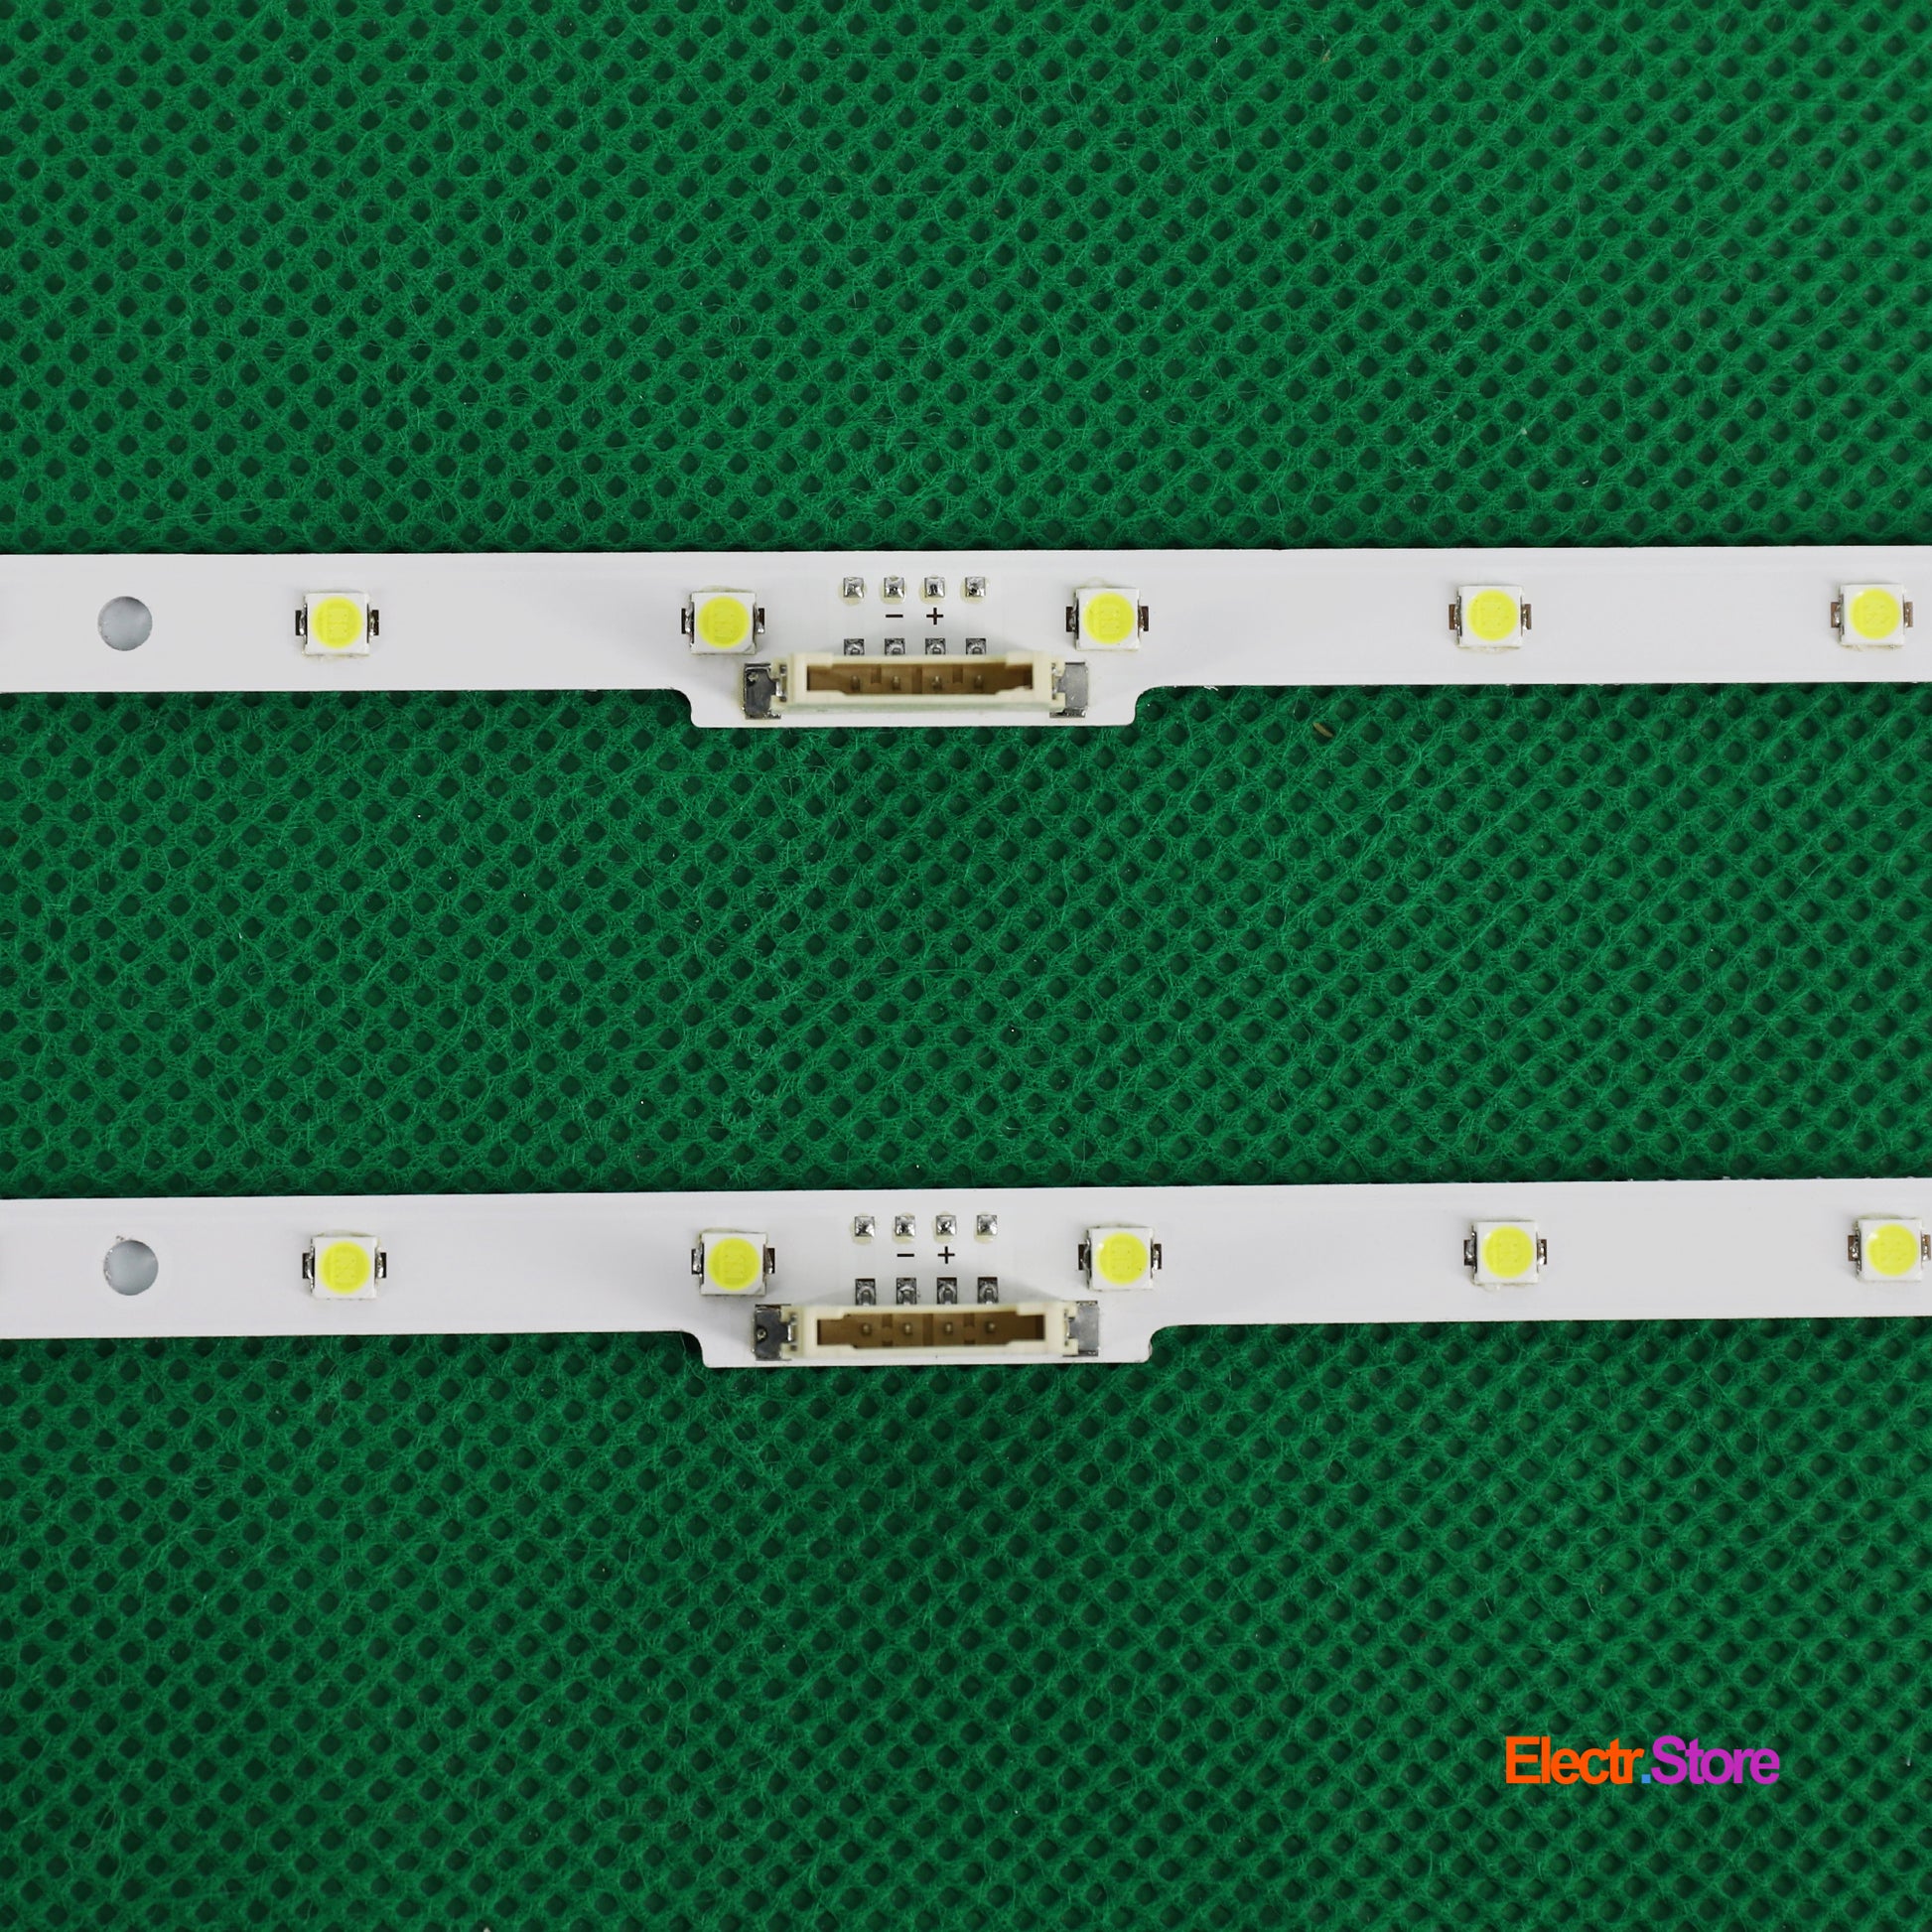 LED Backlight Strip Kits, AOT_40_NU7100F, LM41-00550A, LM41-00549A, BN96-45955A, 2X23LED (2 pcs/kit), for TV 40" 40" LED Backlights LM41-00550A Samsung Electr.Store